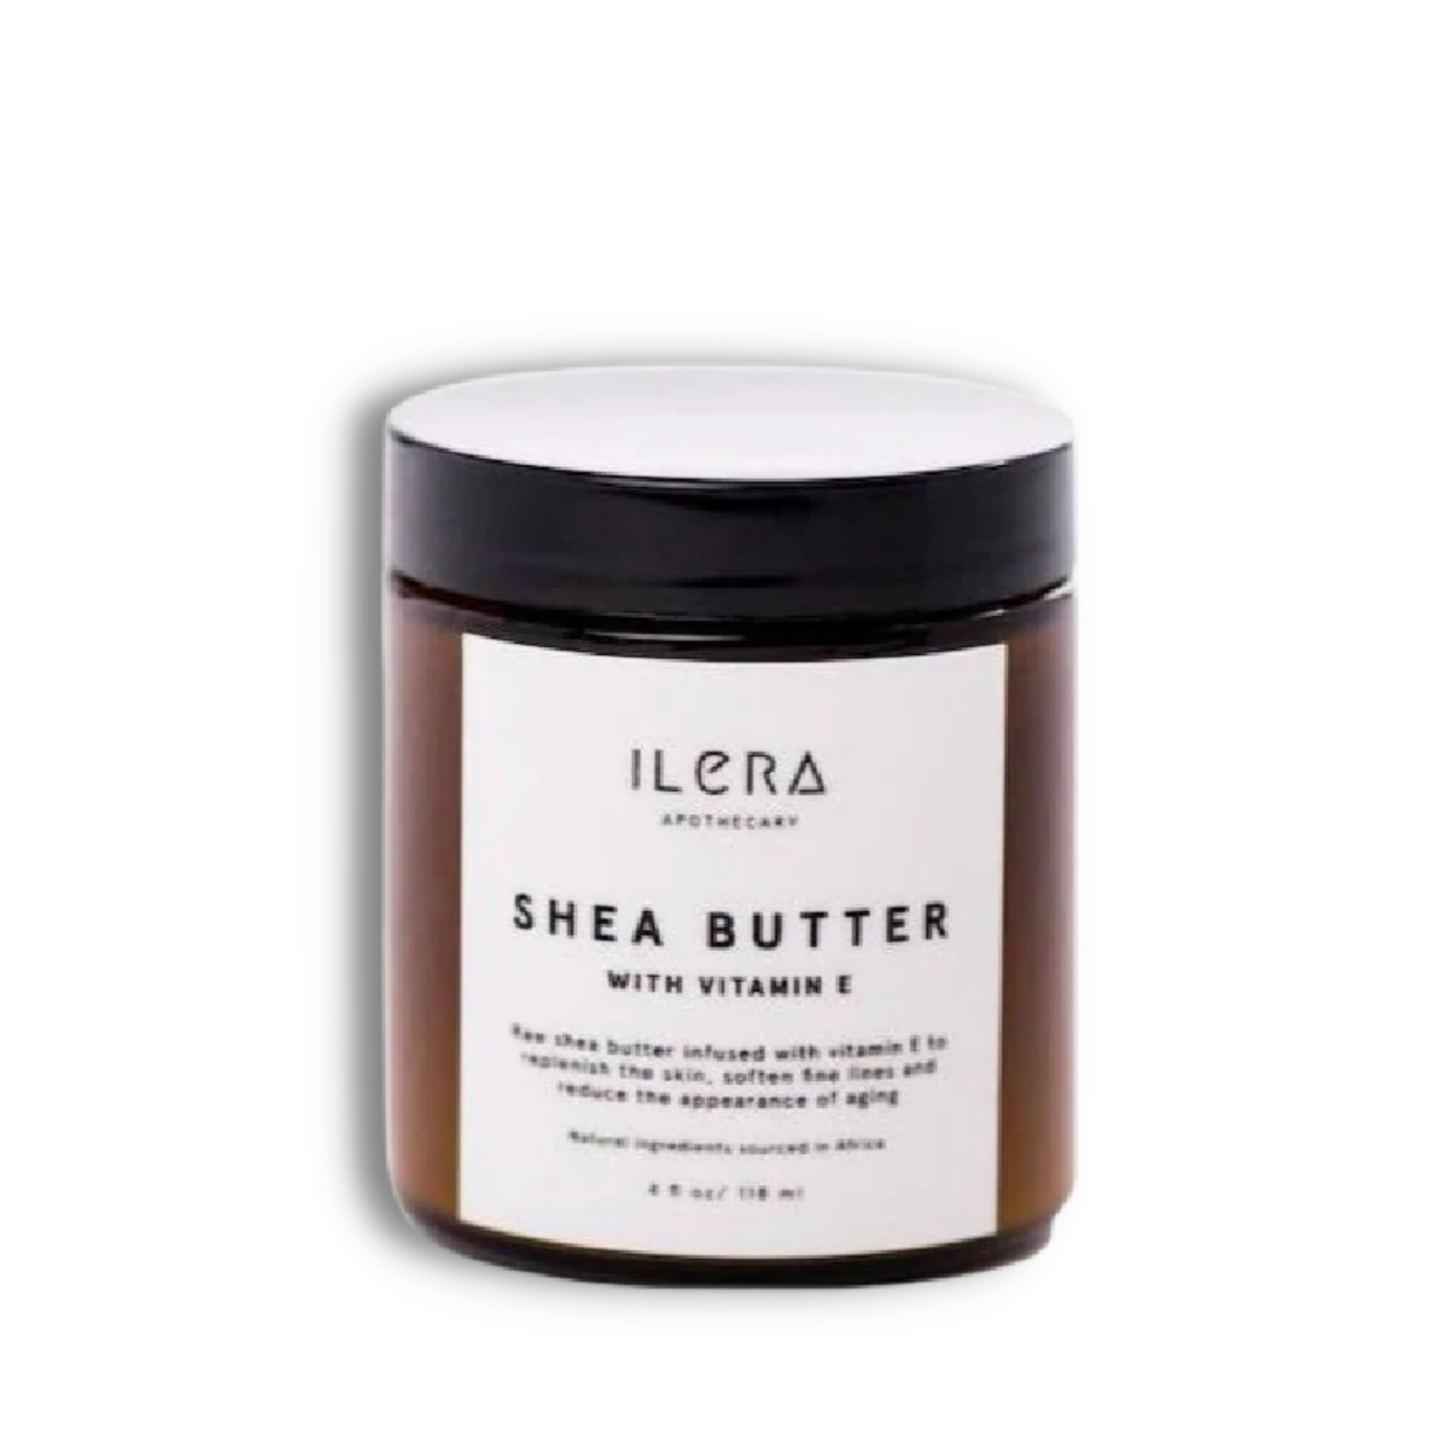 Shea Butter with Vitamin E - ILERA Apothecary 